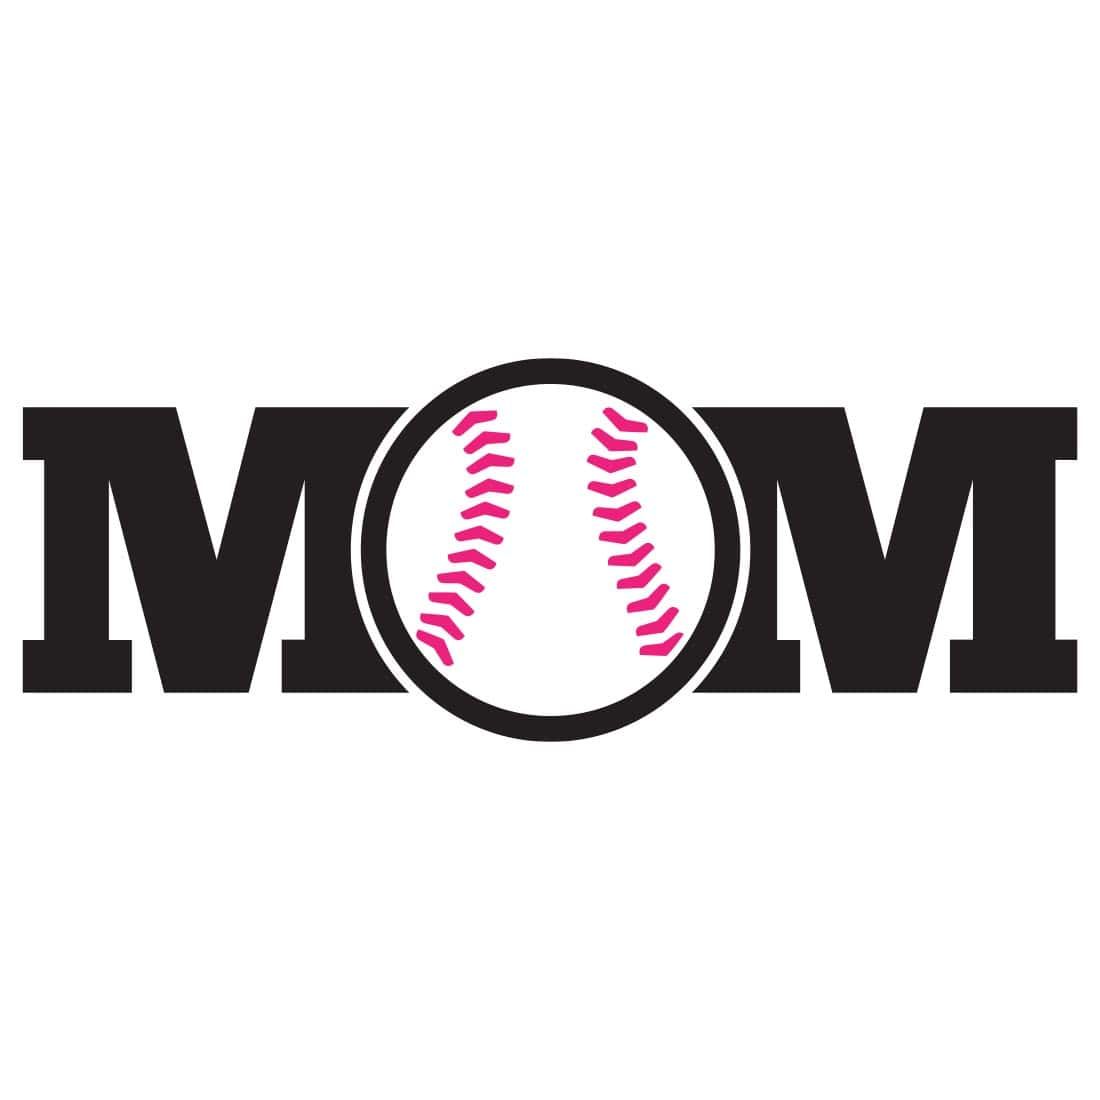 bentley wade share baseball mom images photos